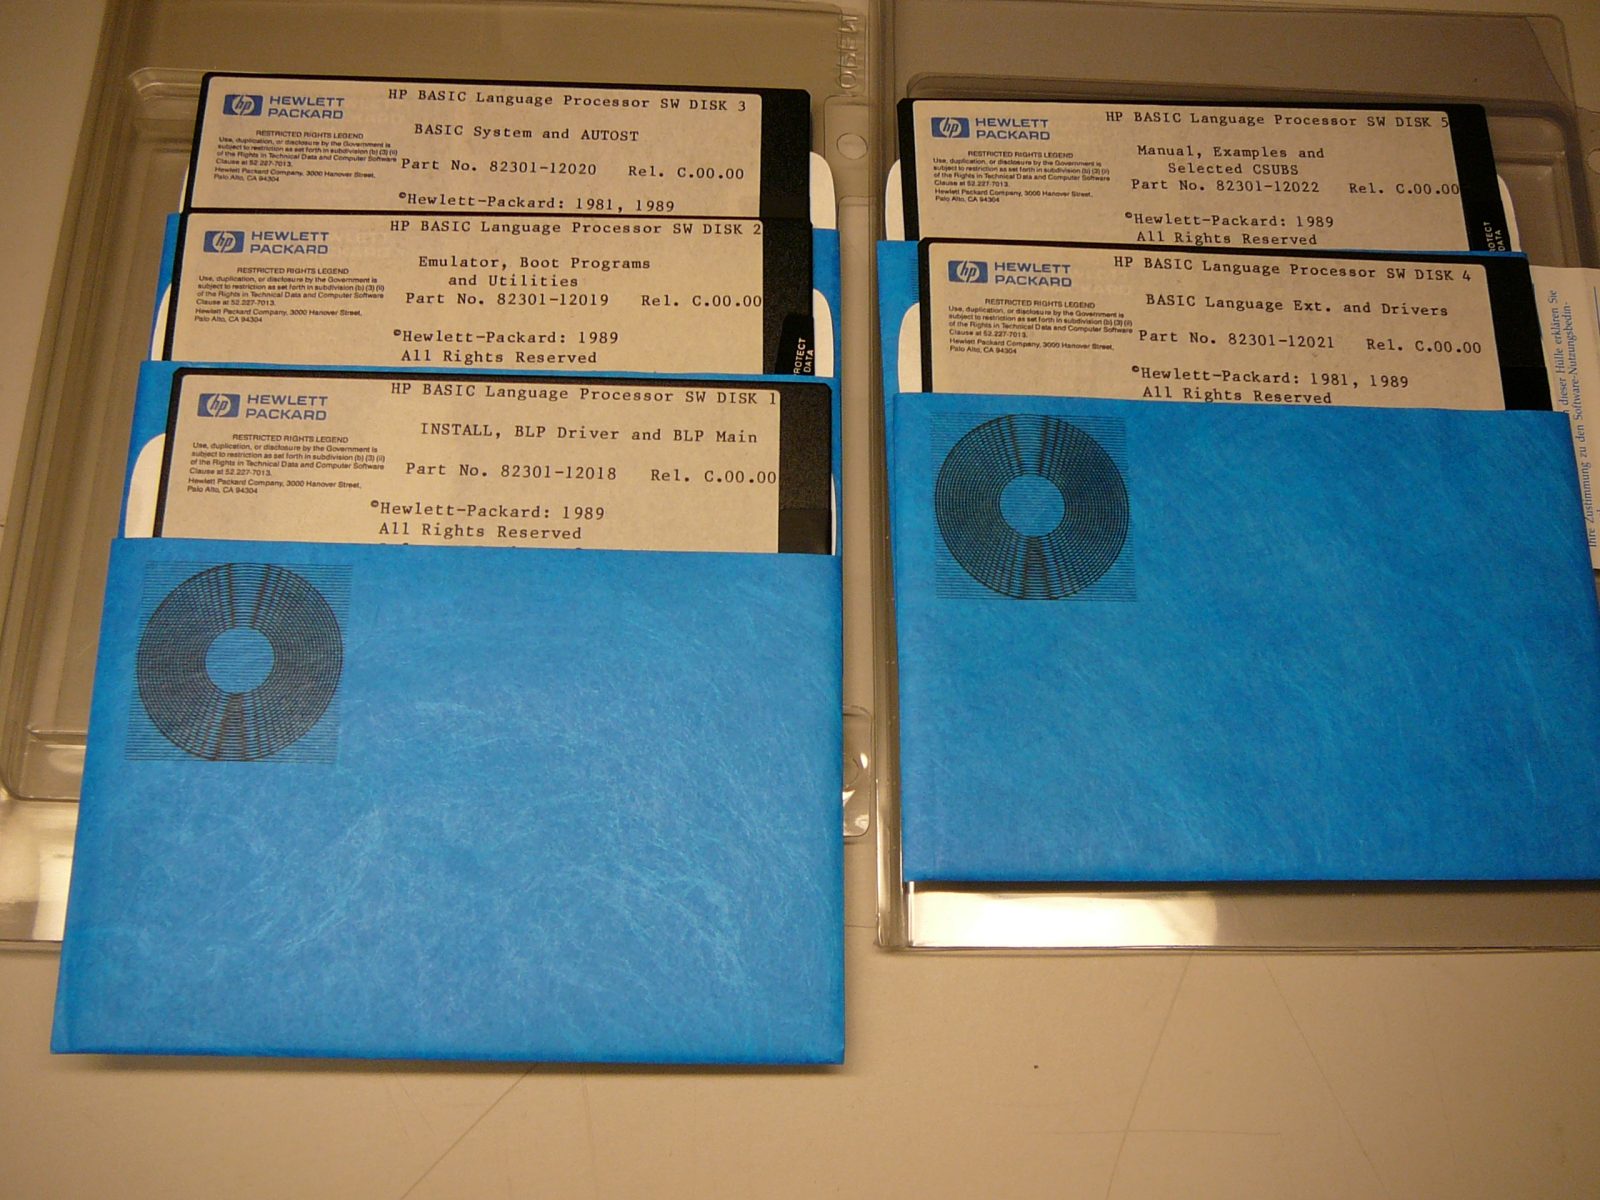 HP/Agilent HP BASIC Language Processor Software, 5 disks, Rev C.00.00